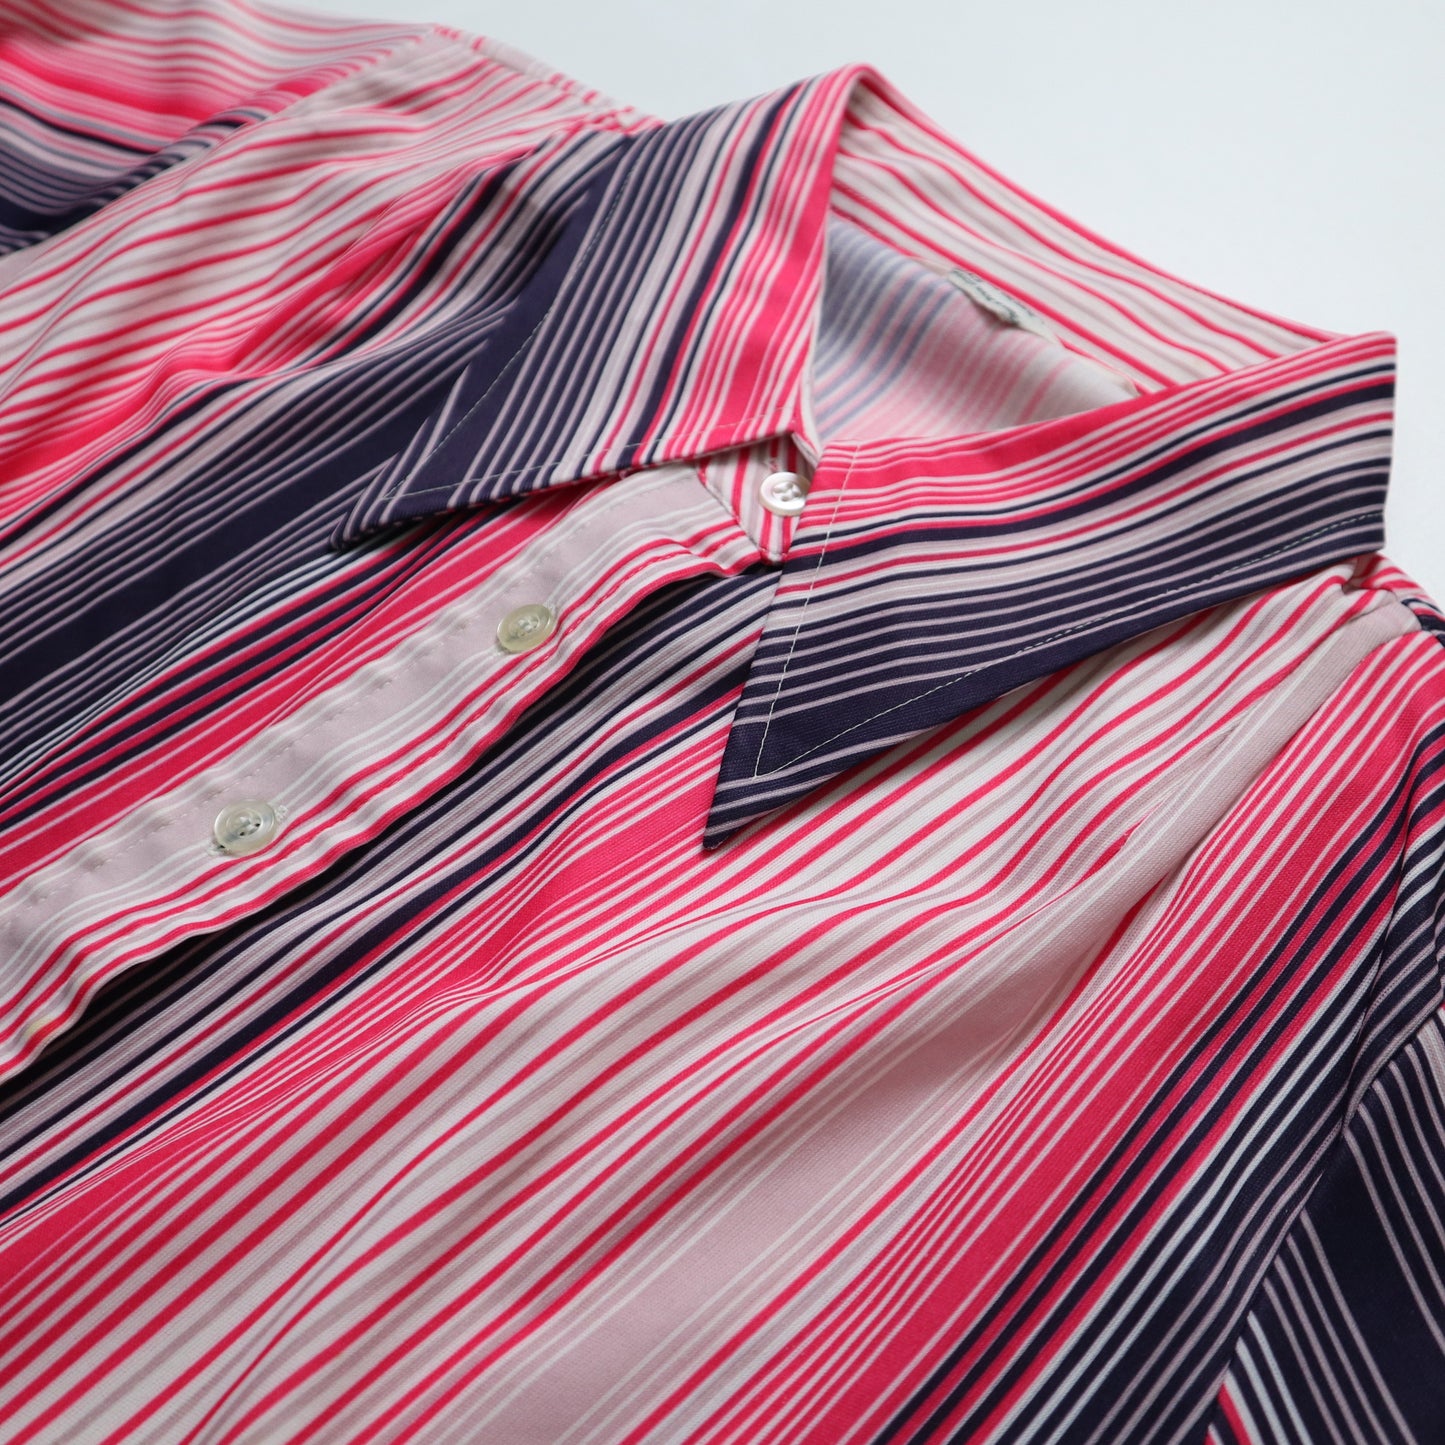 70-80s Spiegel Disco striped arrow collar shirt